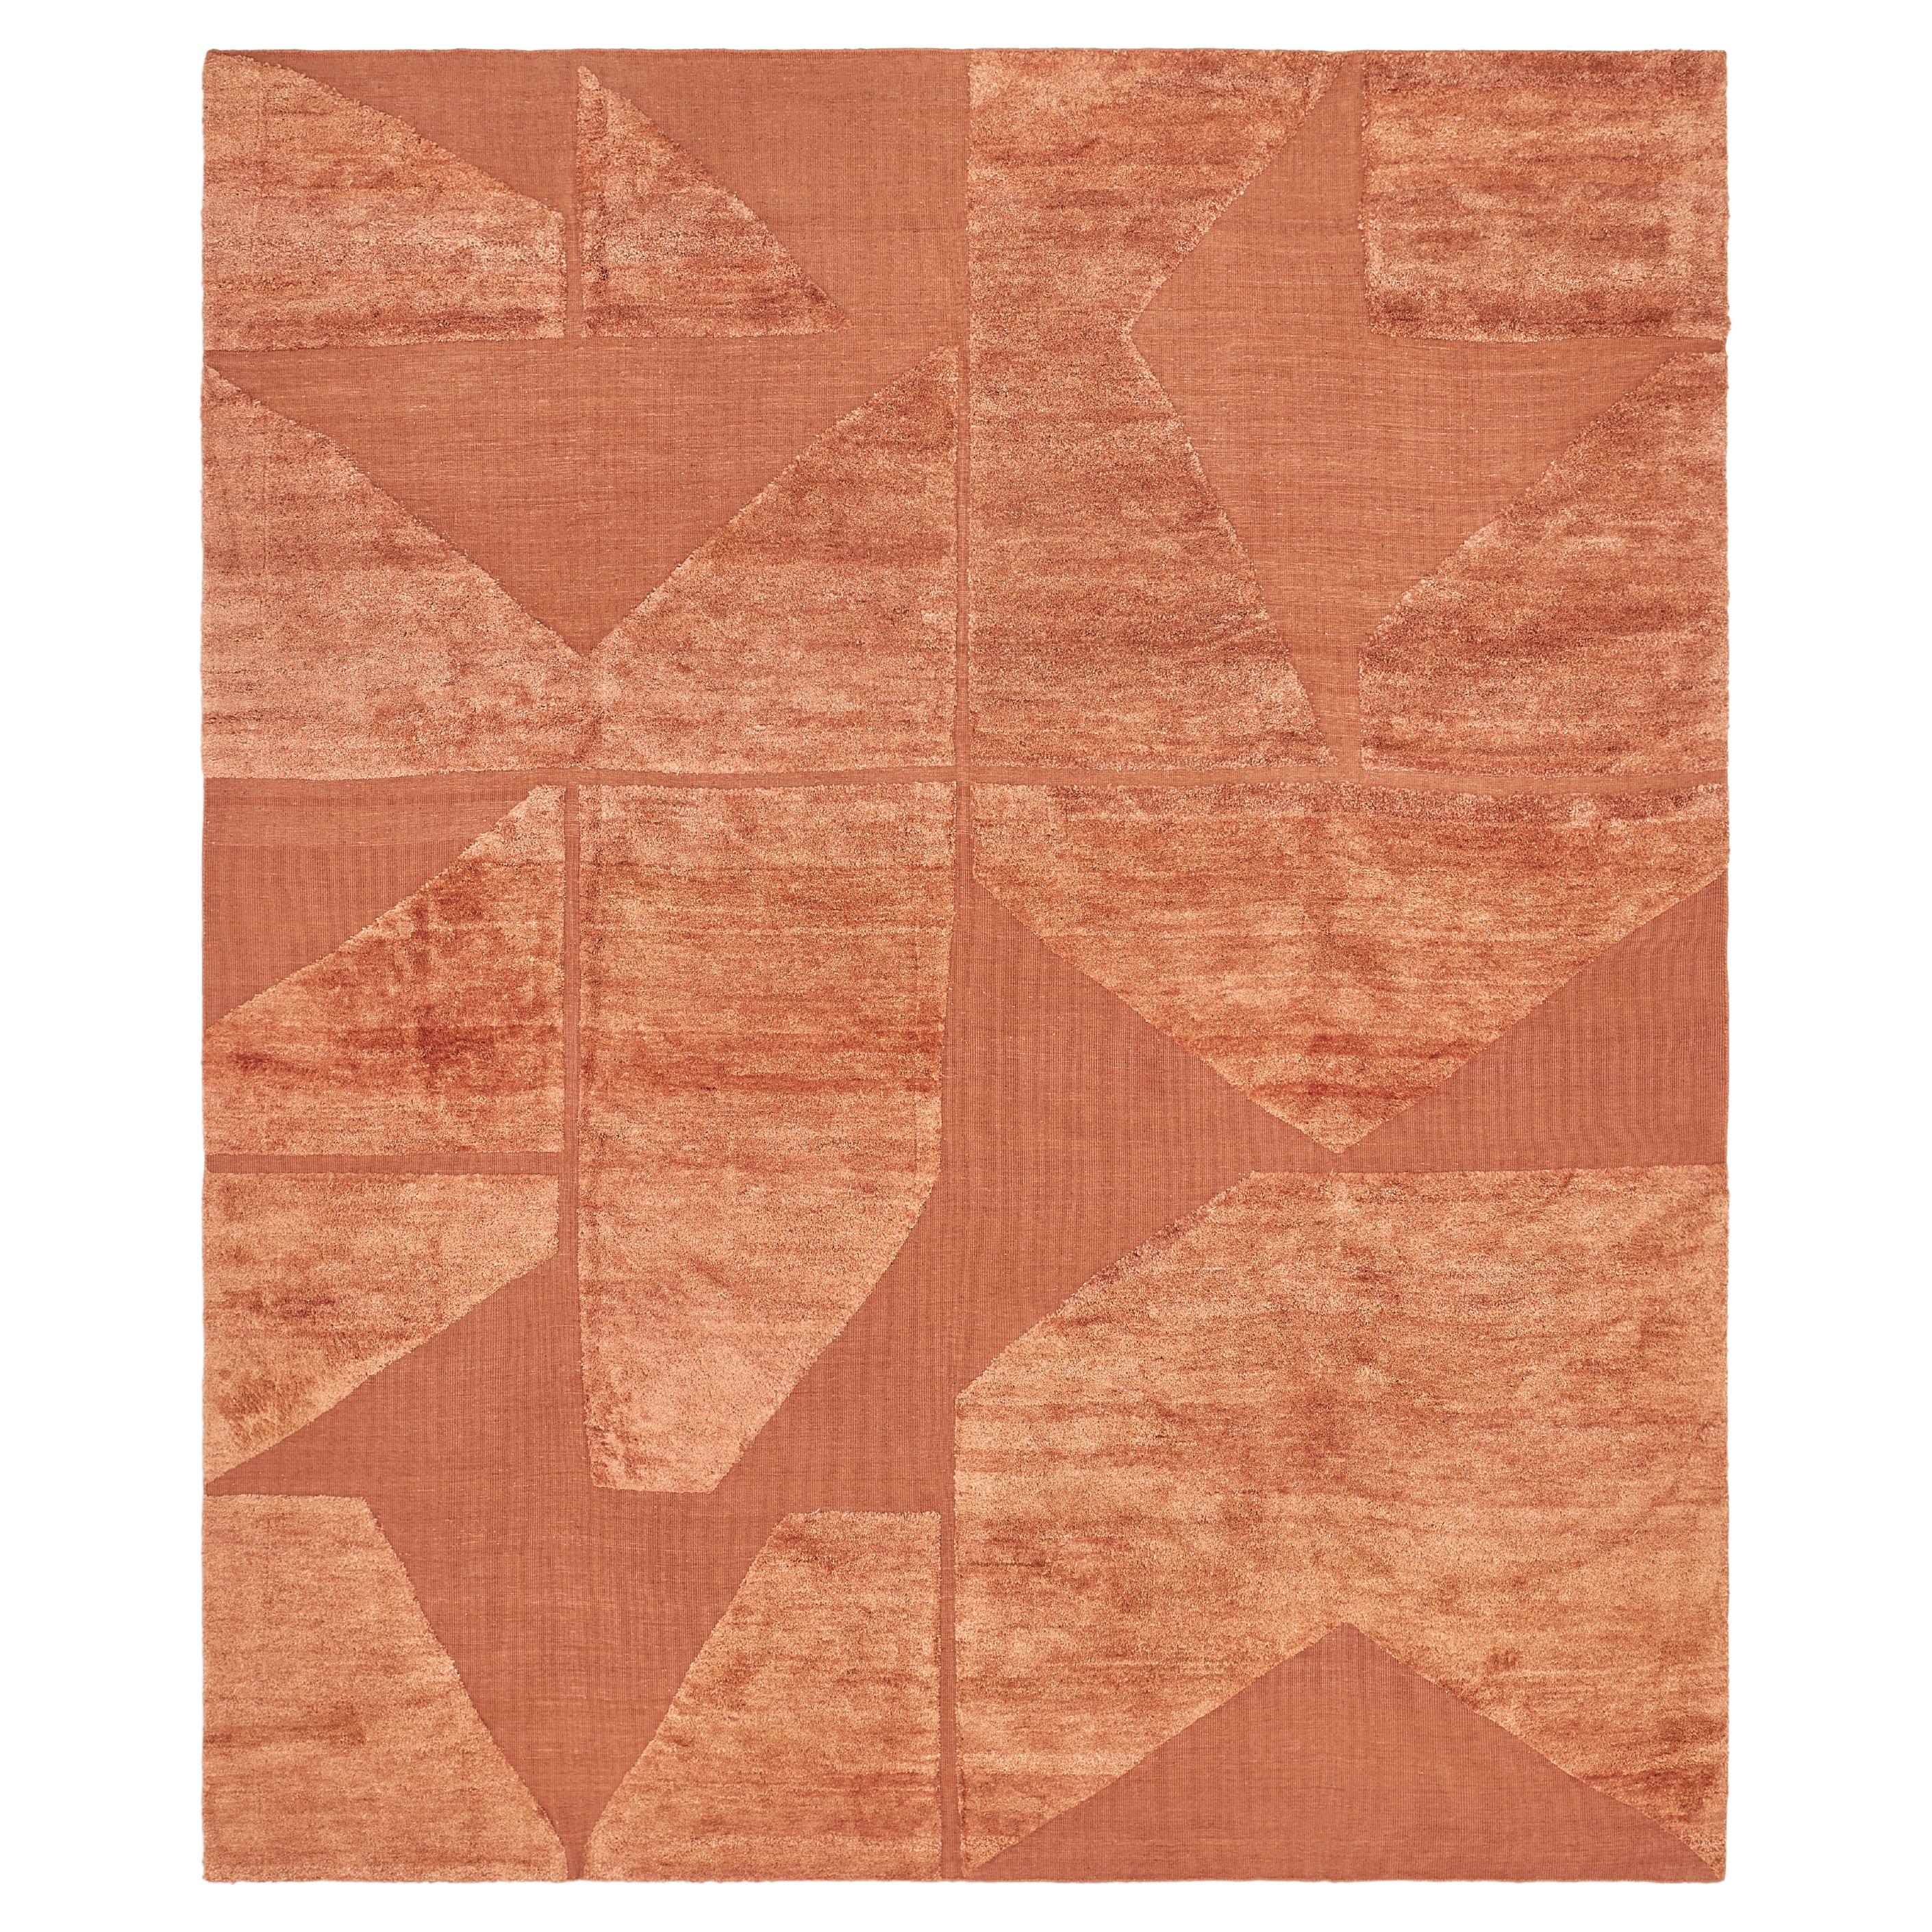 geometry. 006 - Hand-woven flatweave field with Persian knot cut pile motif